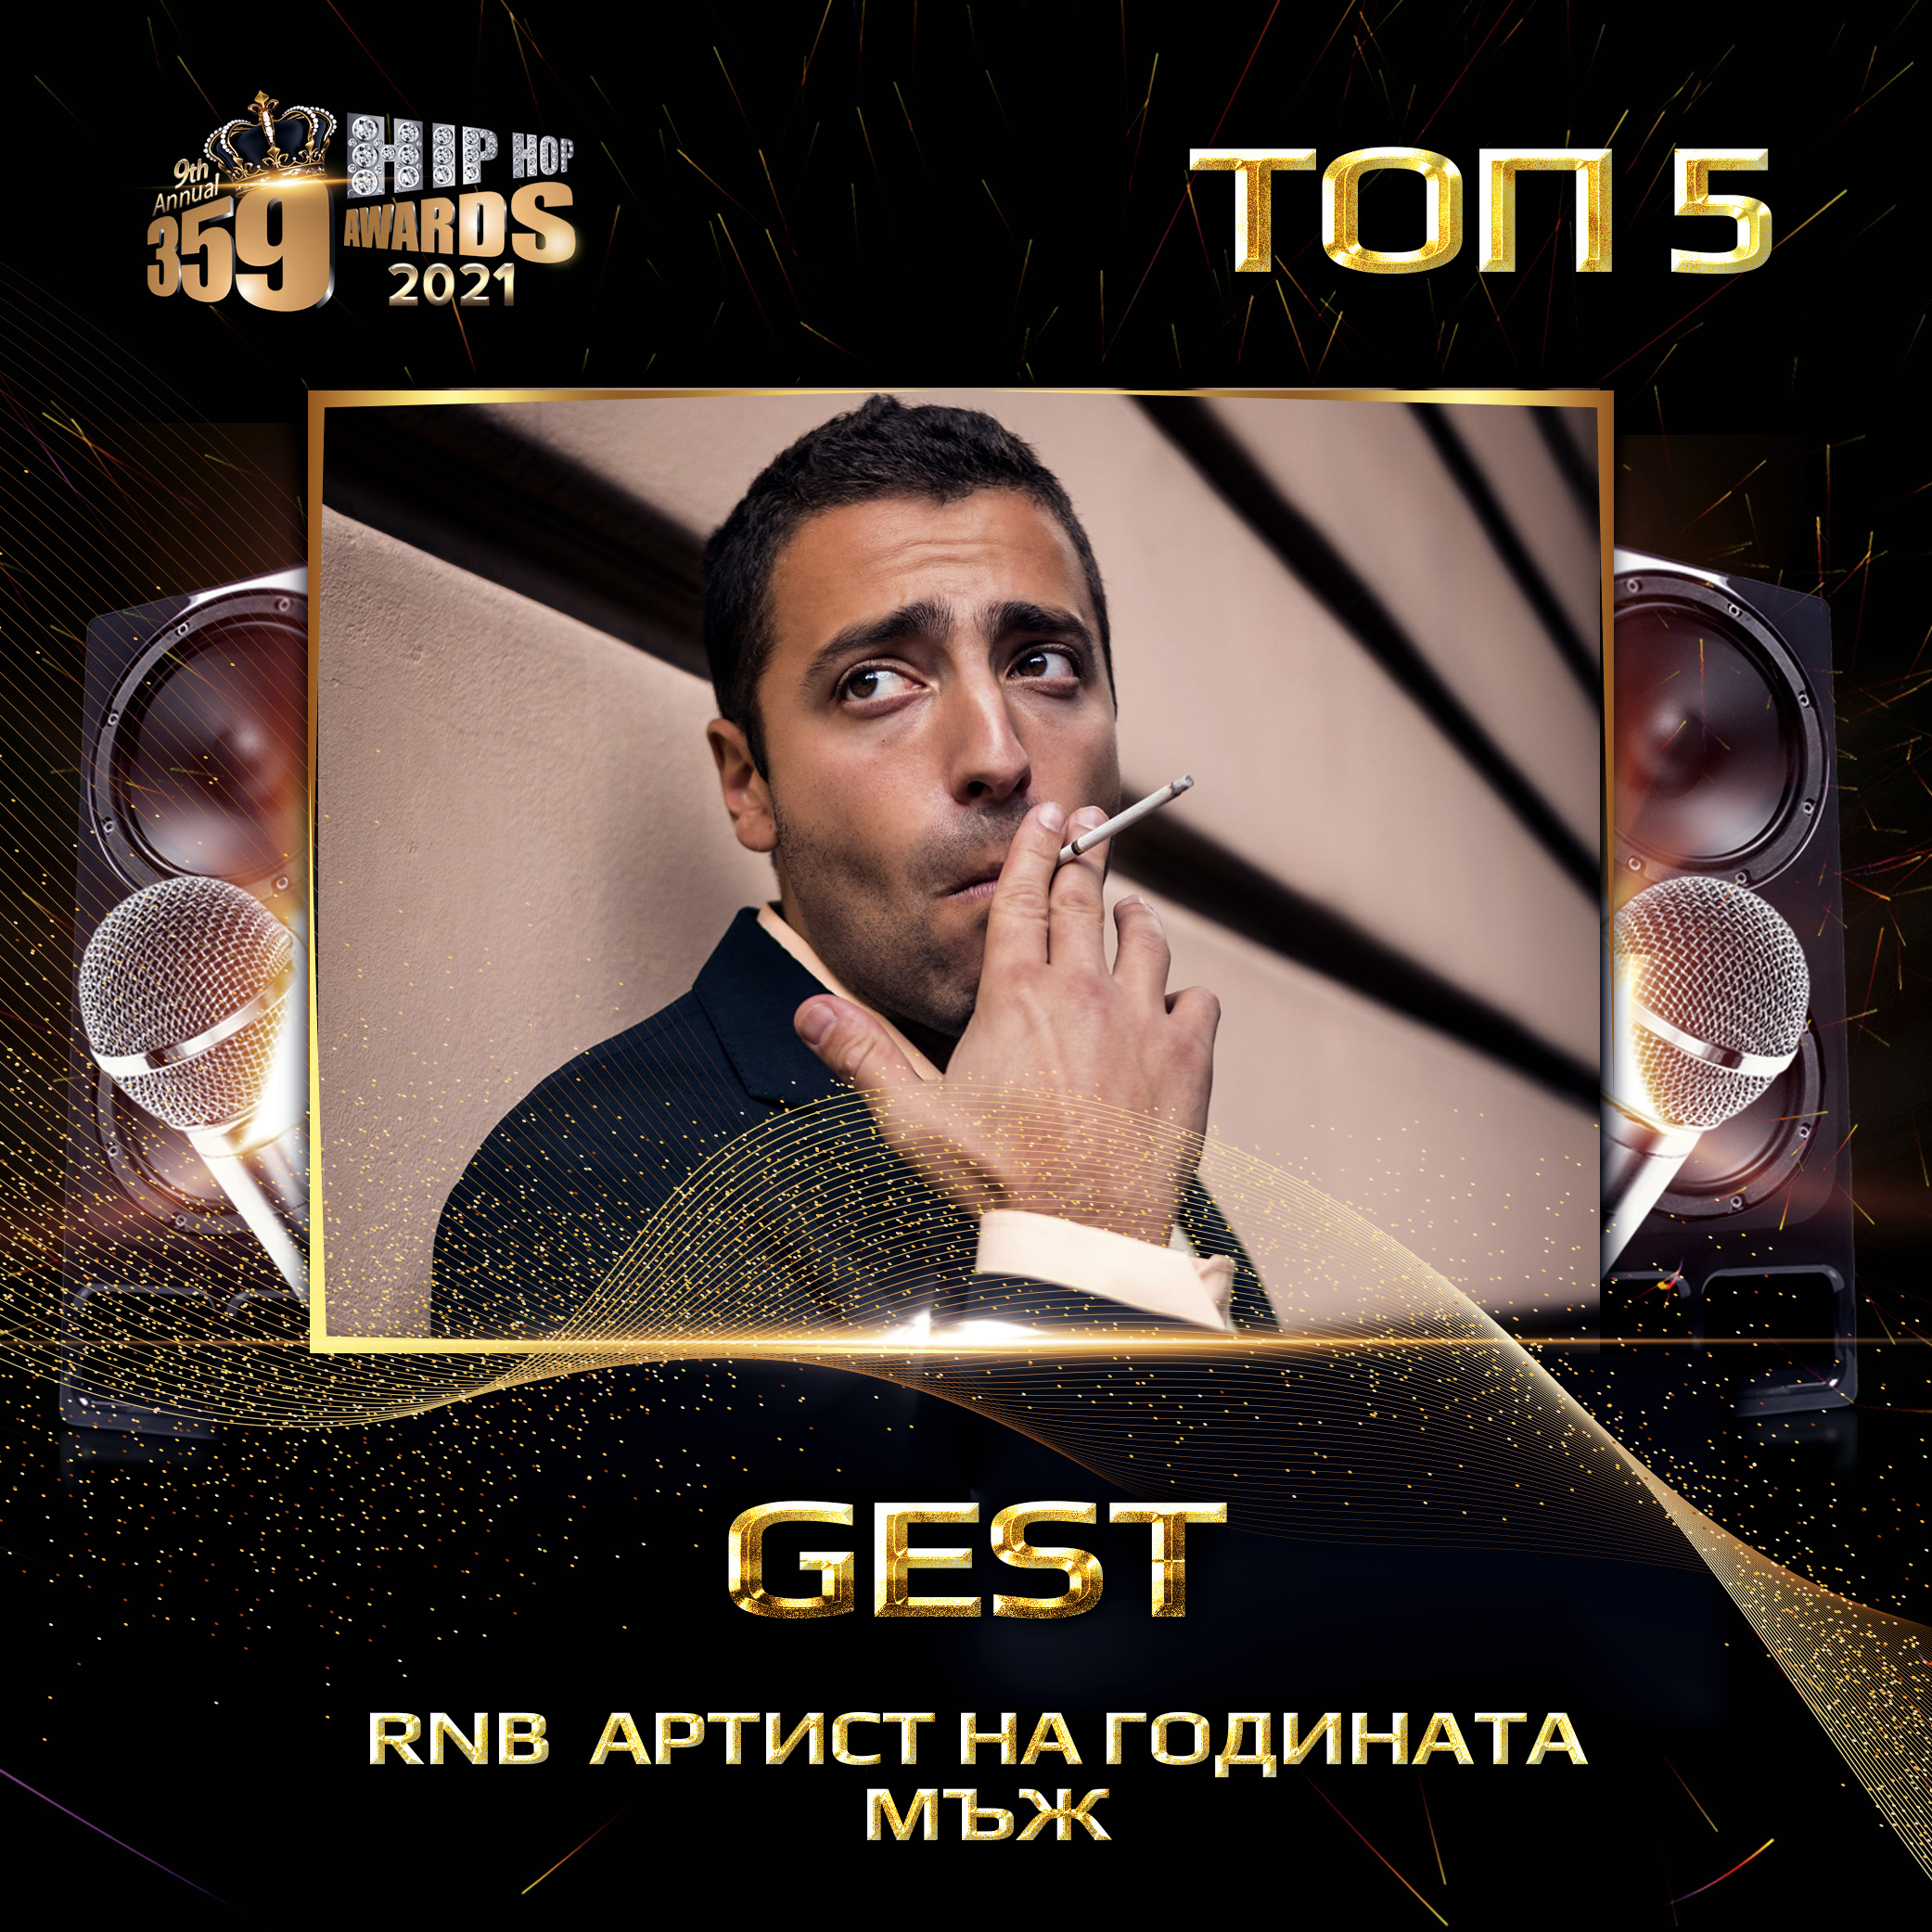 top 5  359 awards 2021 rnb men  gest - Най-добър RNB артист 2020 / Мъж